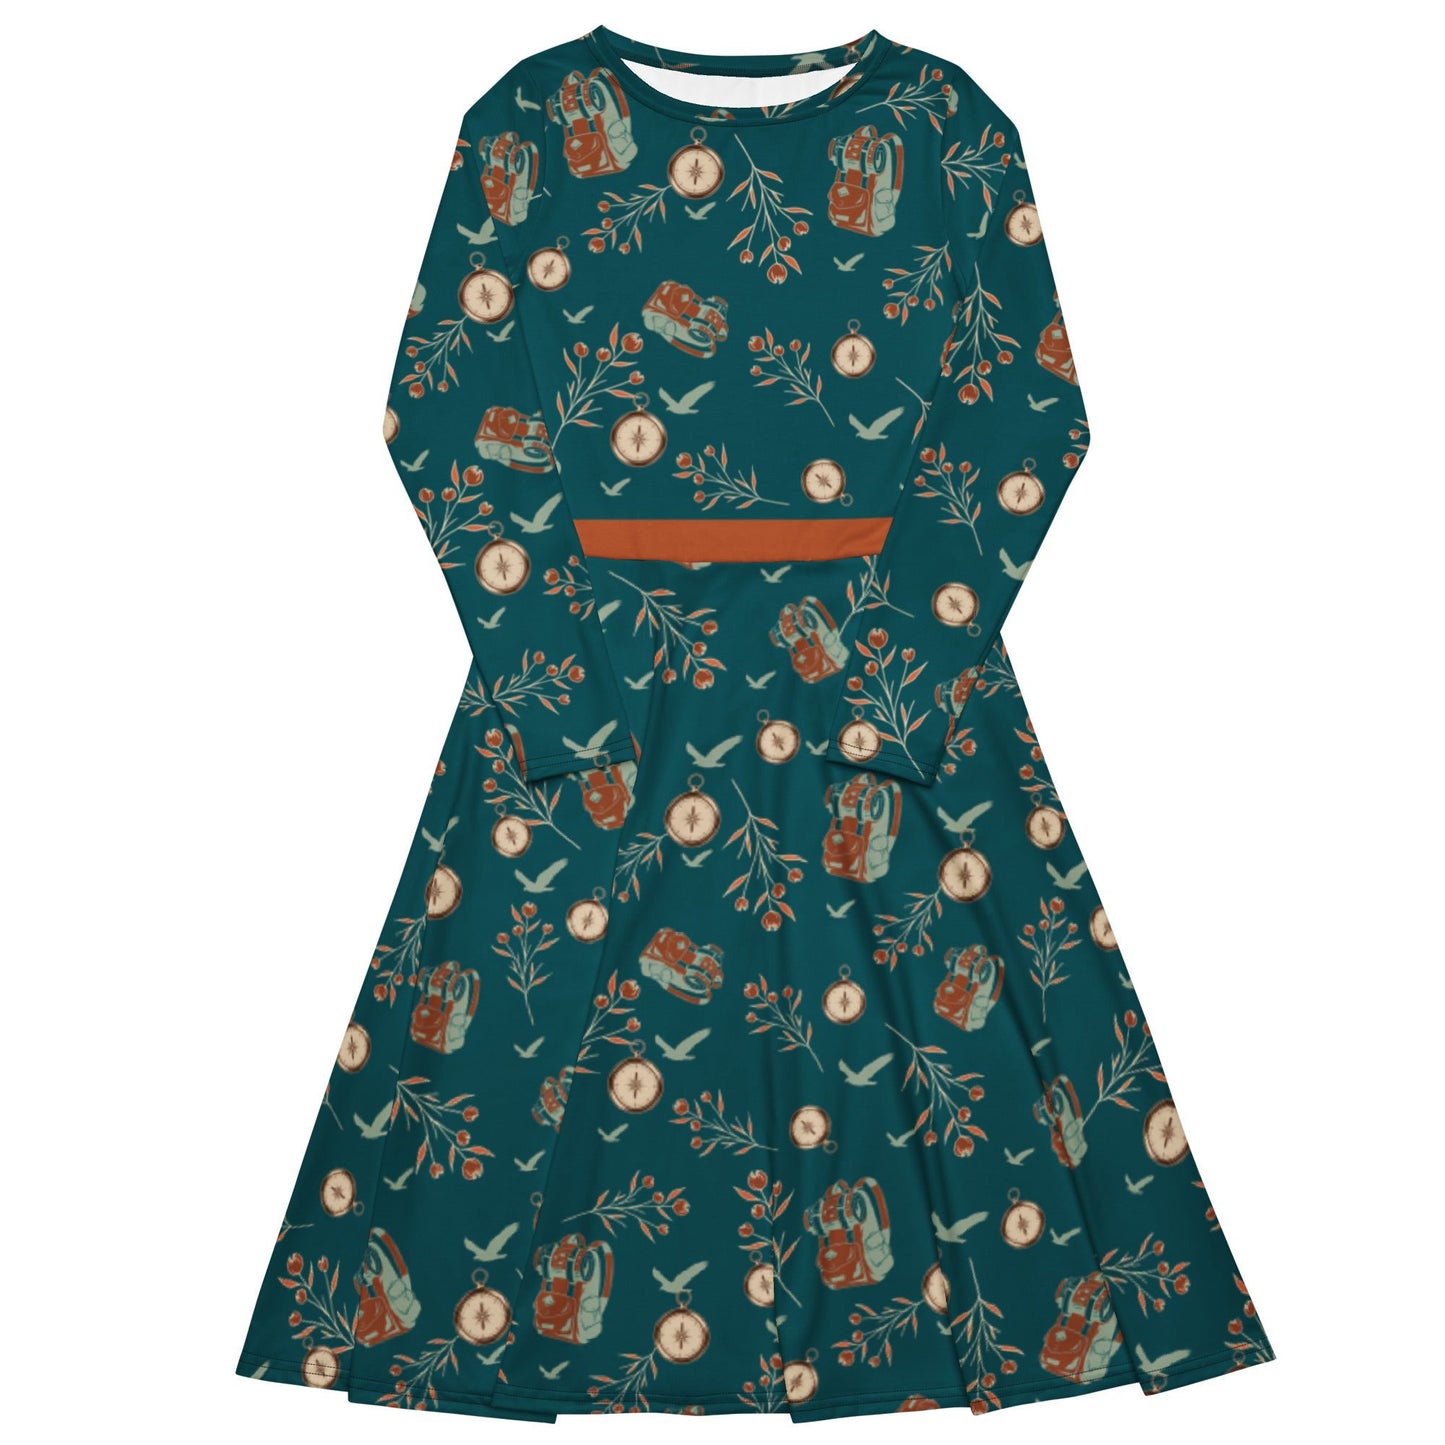 Backpacker Print Long Sleeve Adventure Dress with Pockets - Appalachian Bittersweet -